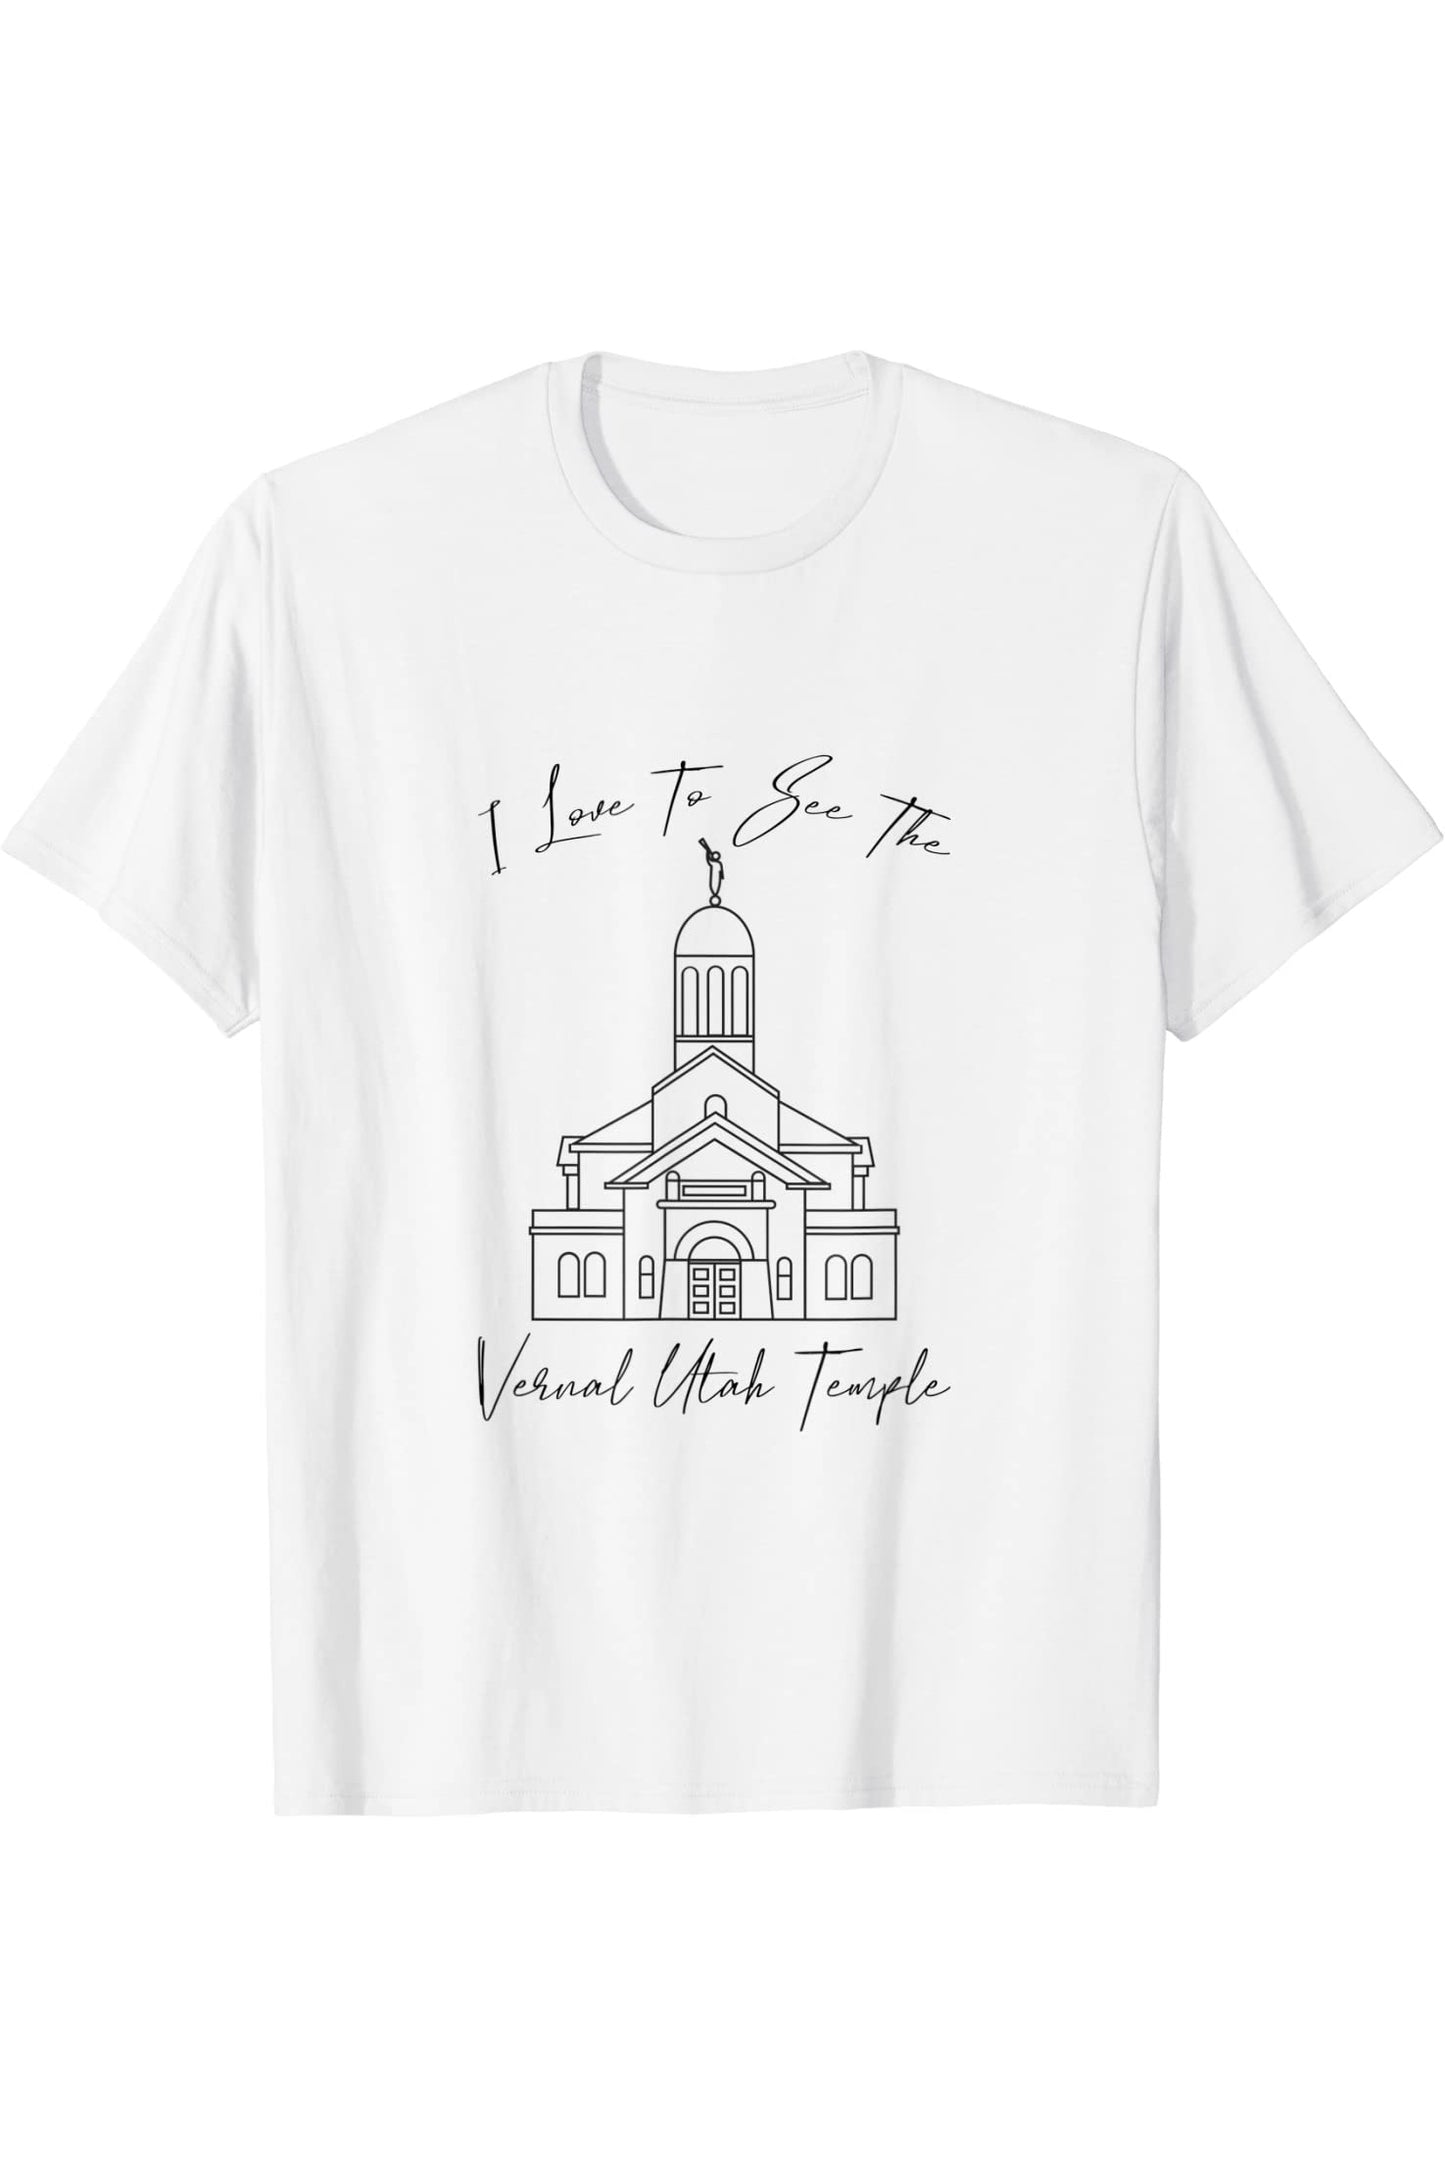 Vernal Utah Temple T-Shirt - Calligraphy Style (English) US